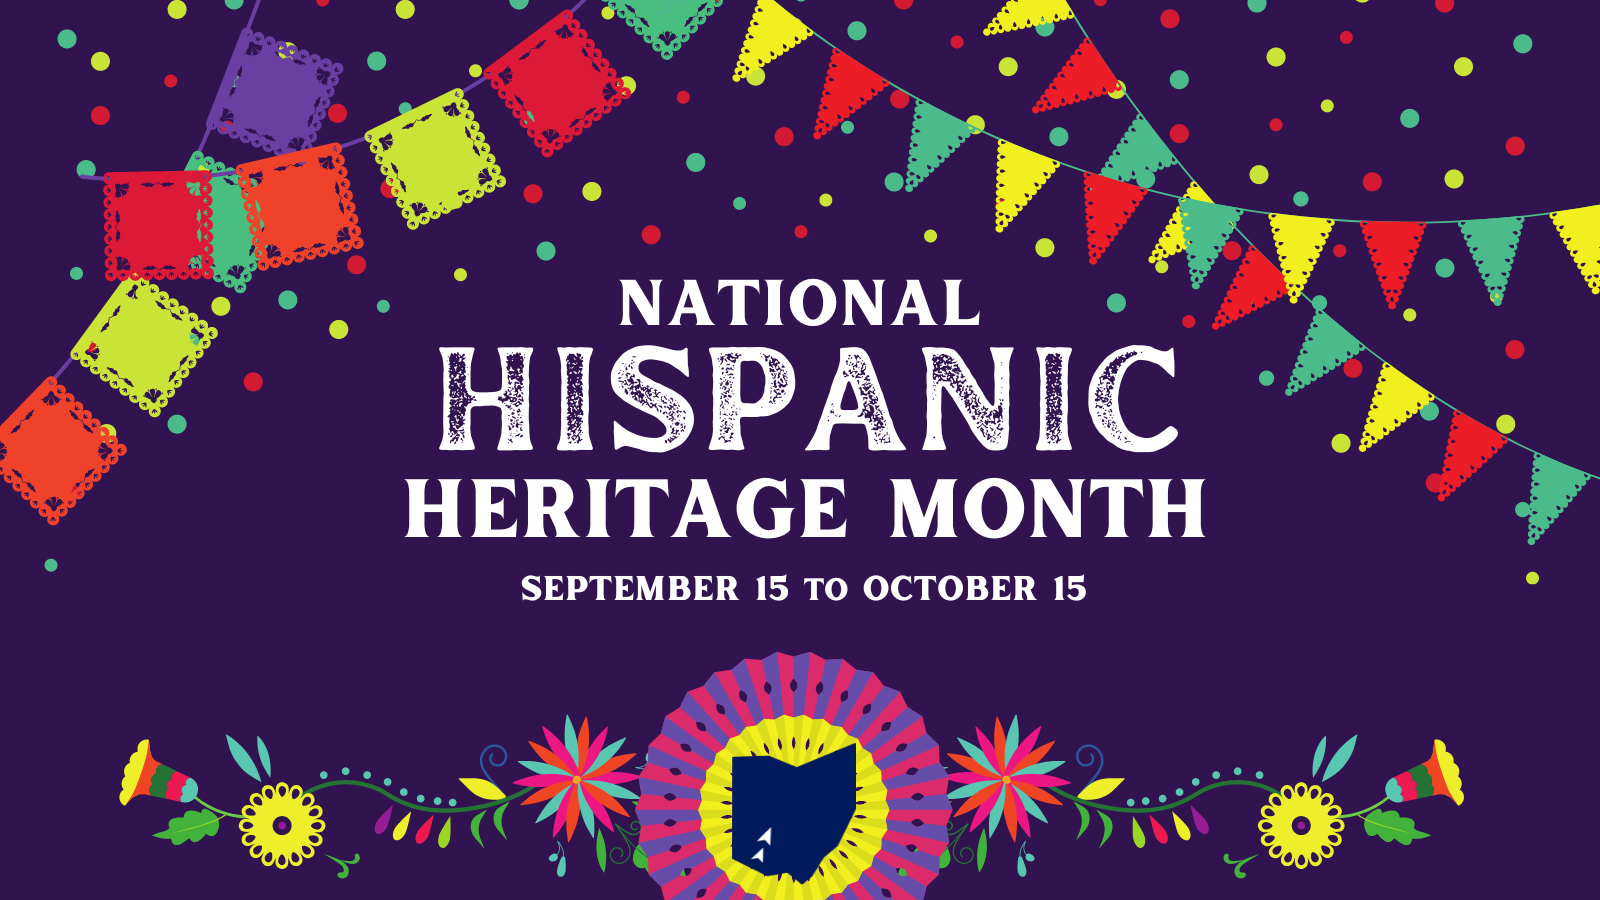 Mott Community College - Celebrate Hispanic Heritage Month events